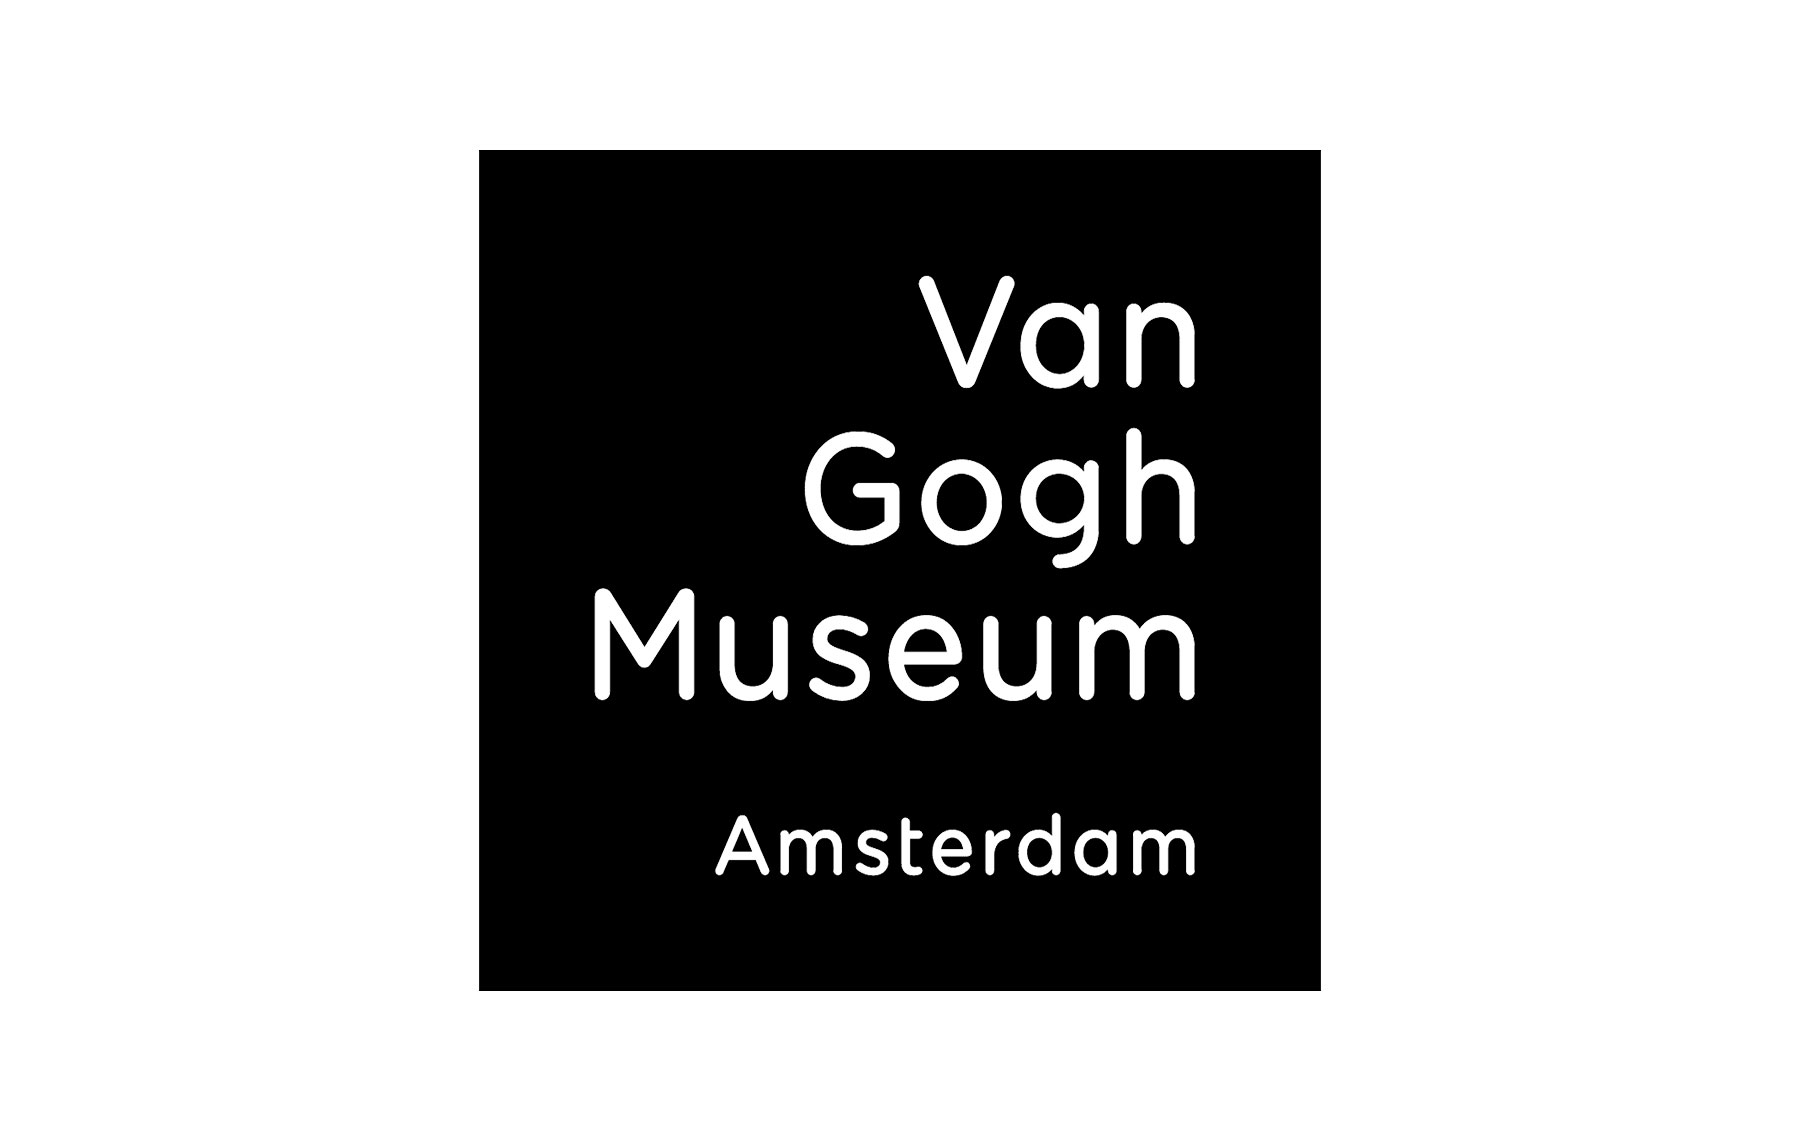 Van Gogh Museum 梵高博物馆视觉形象设计